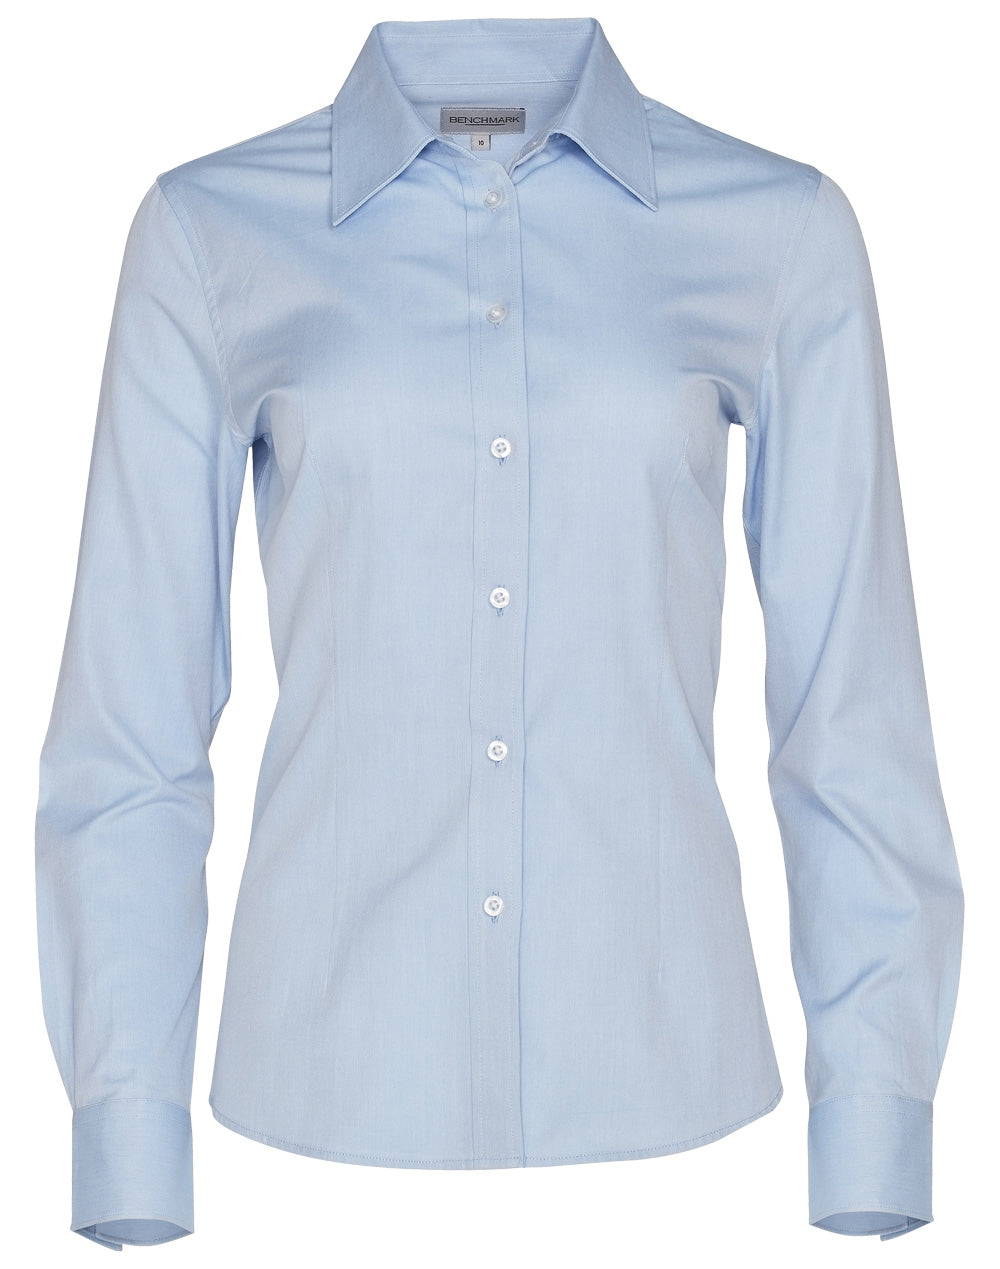 Benchmark M8005L Women's Pinpoint Oxford Long Sleeve Shirt